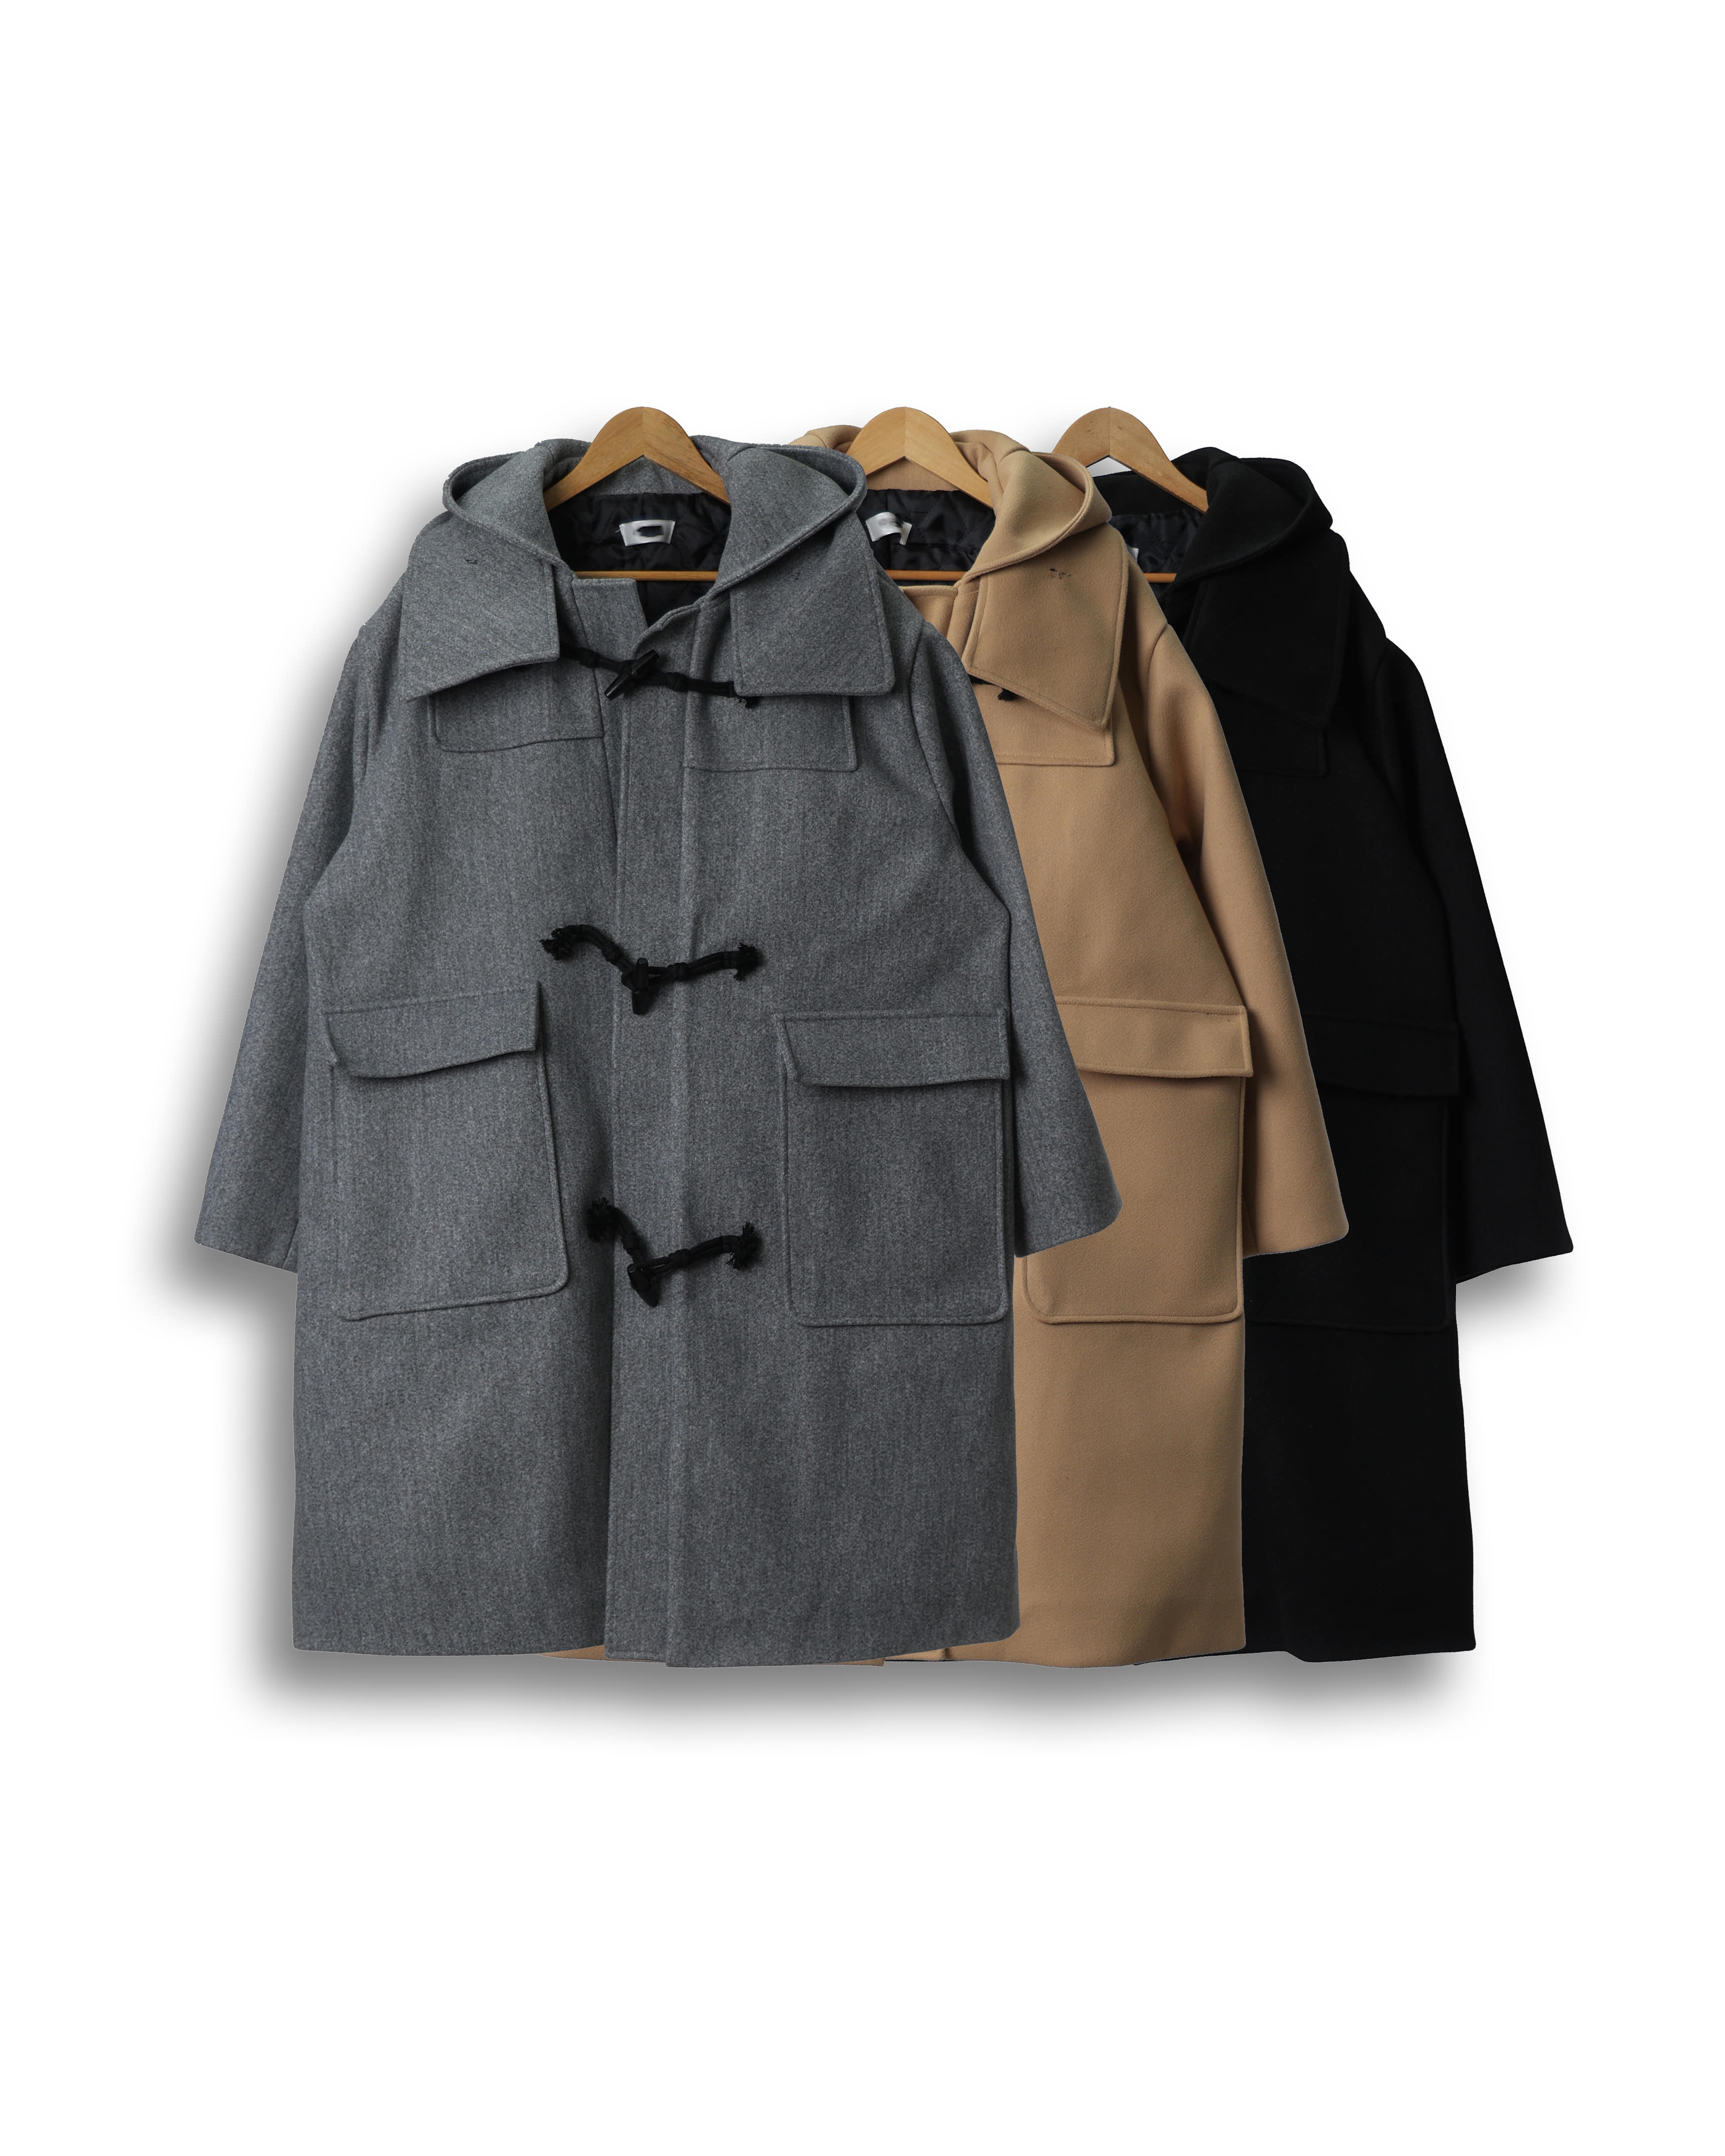 RAO High Button Padded Duffle Coat (Black/Beige/Gray)